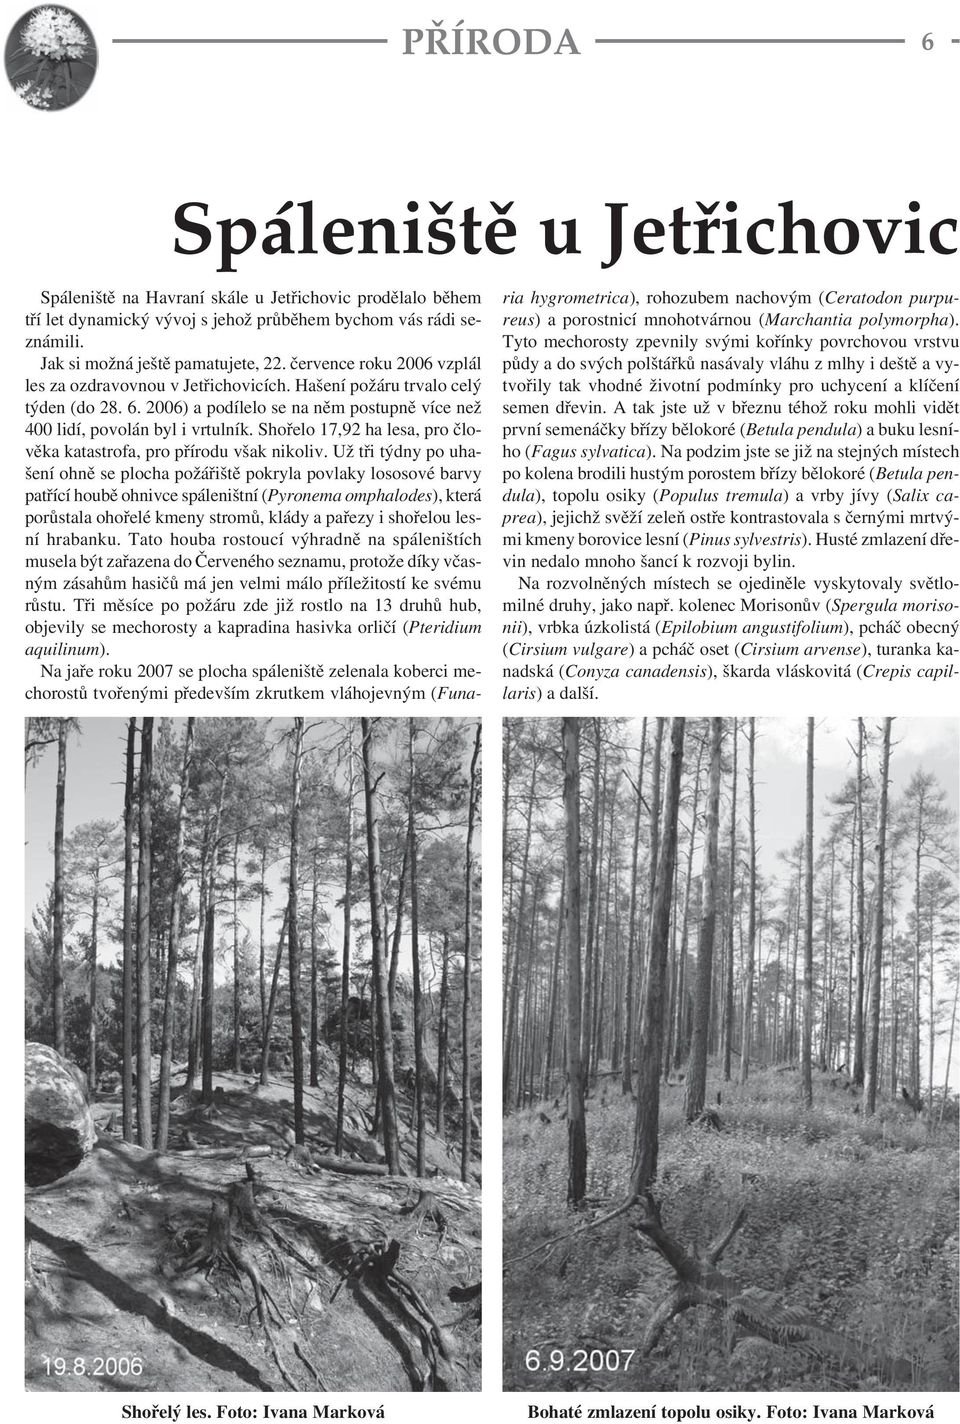 Shořelo 17,92 ha lesa, pro člověka katastrofa, pro přírodu však nikoliv.